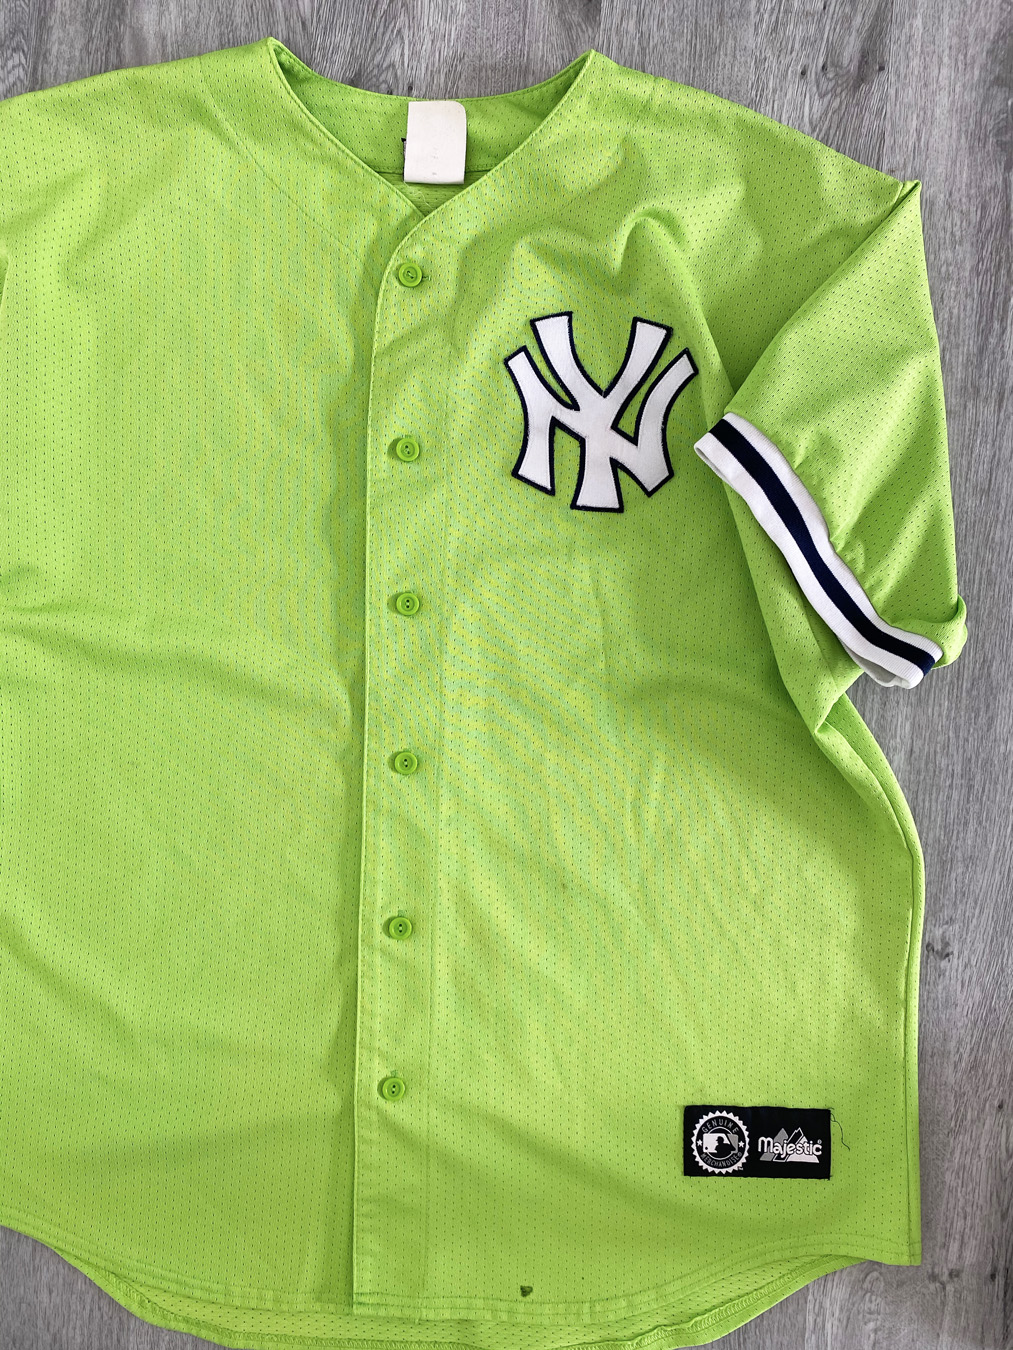 yankees green jersey